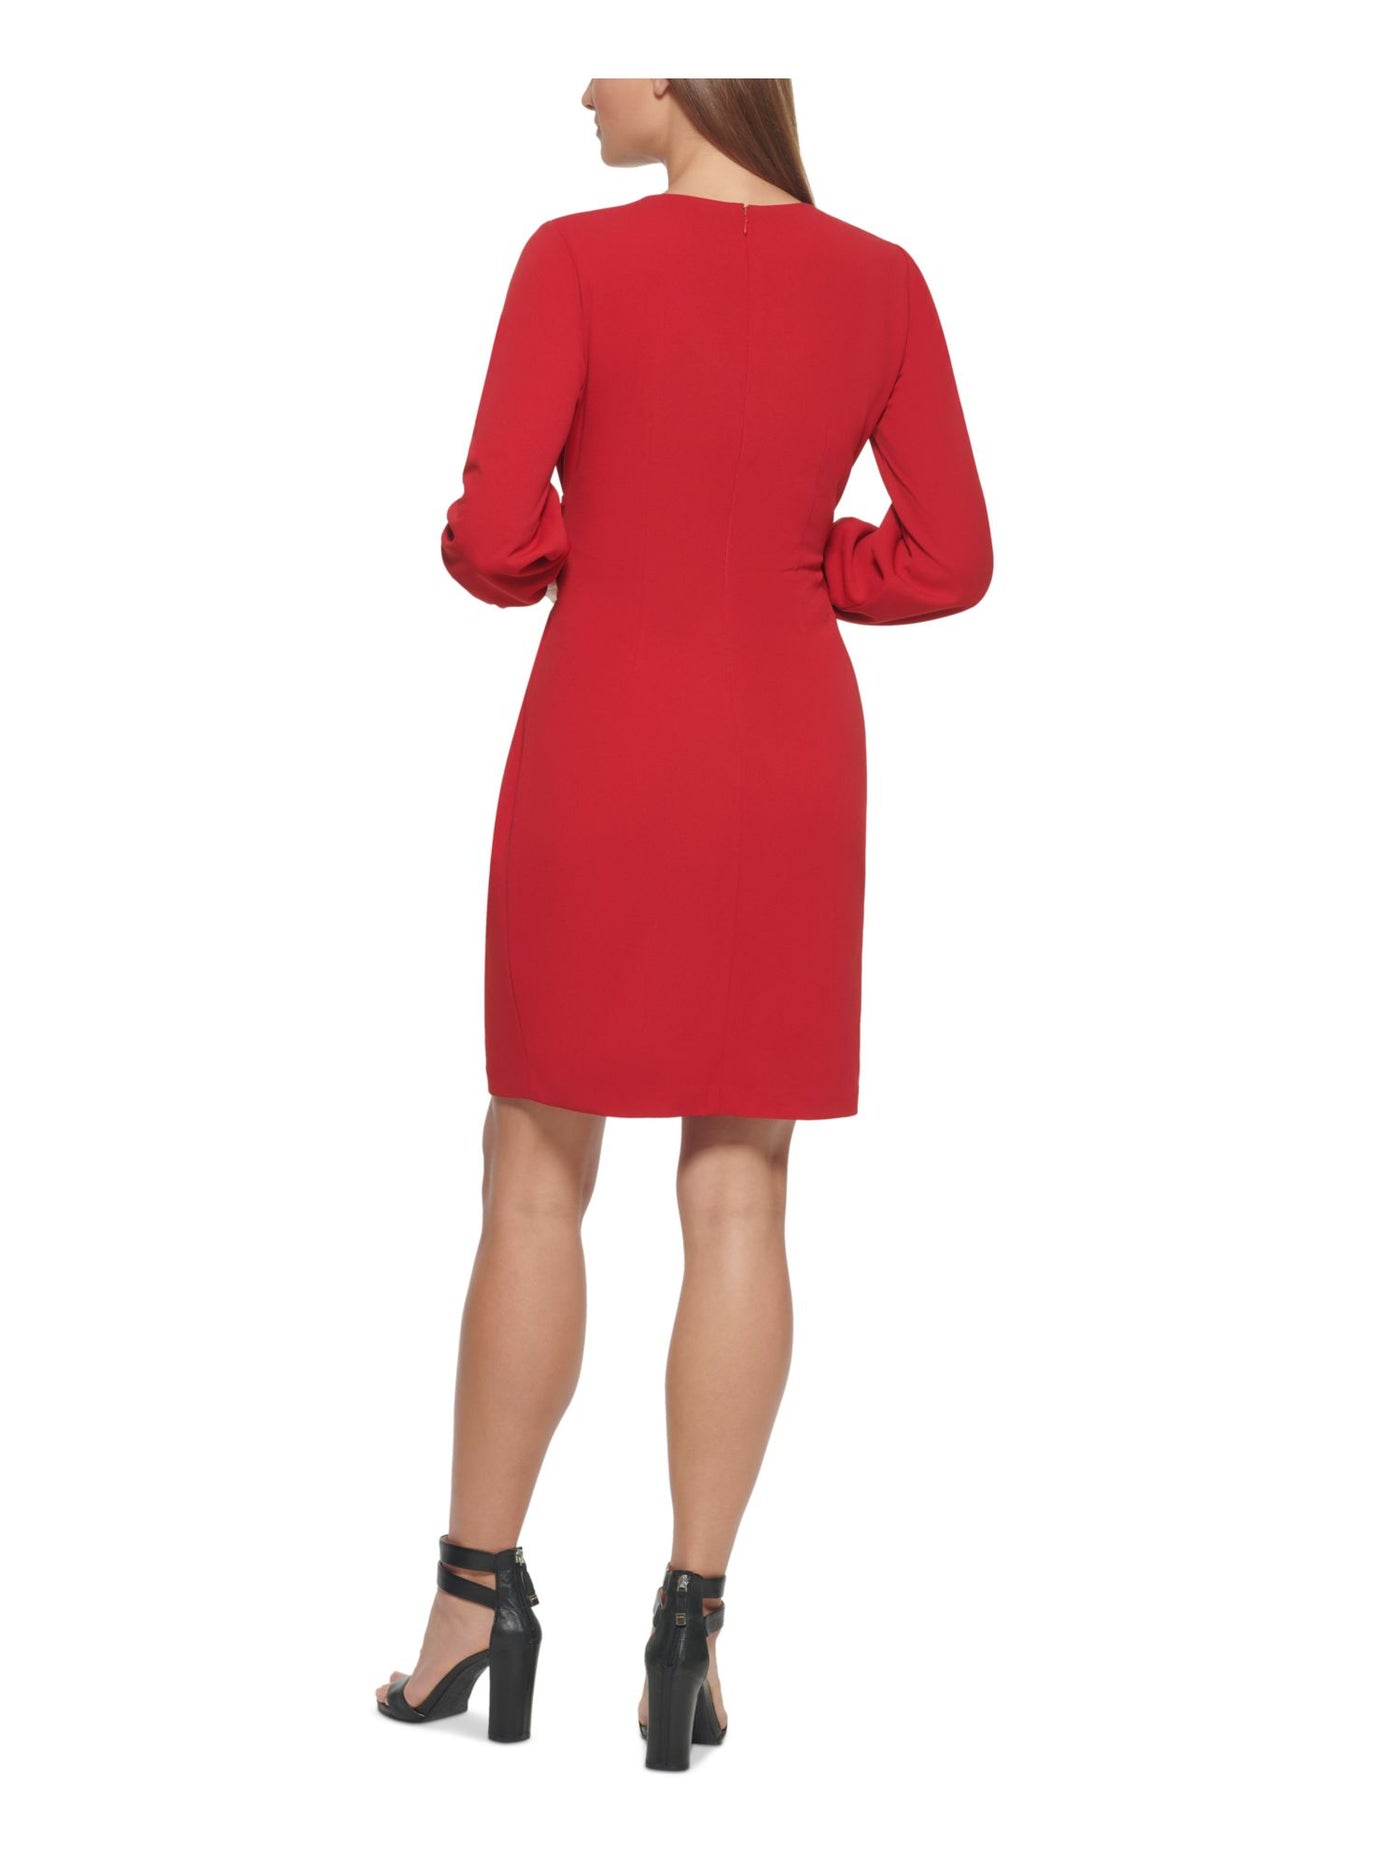 DKNY Womens Red Stretch Zippered Twist Front Side Waist Long Sleeve Surplice Neckline Above The Knee Wear To Work Faux Wrap Dress 16